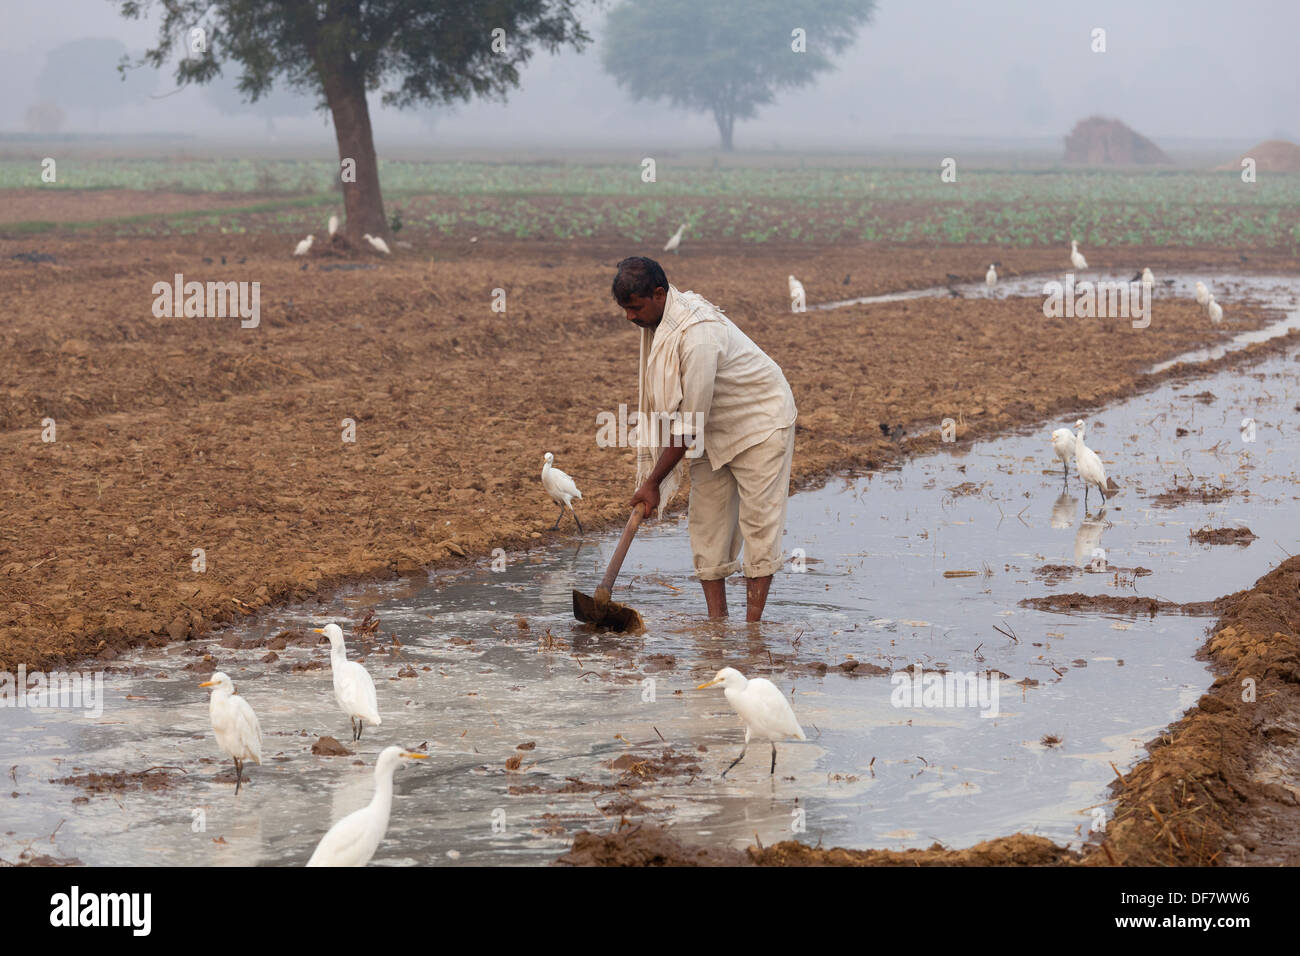 india, Uttar Pradesh, Farmer working on irrigation dykes in field Stock Photo